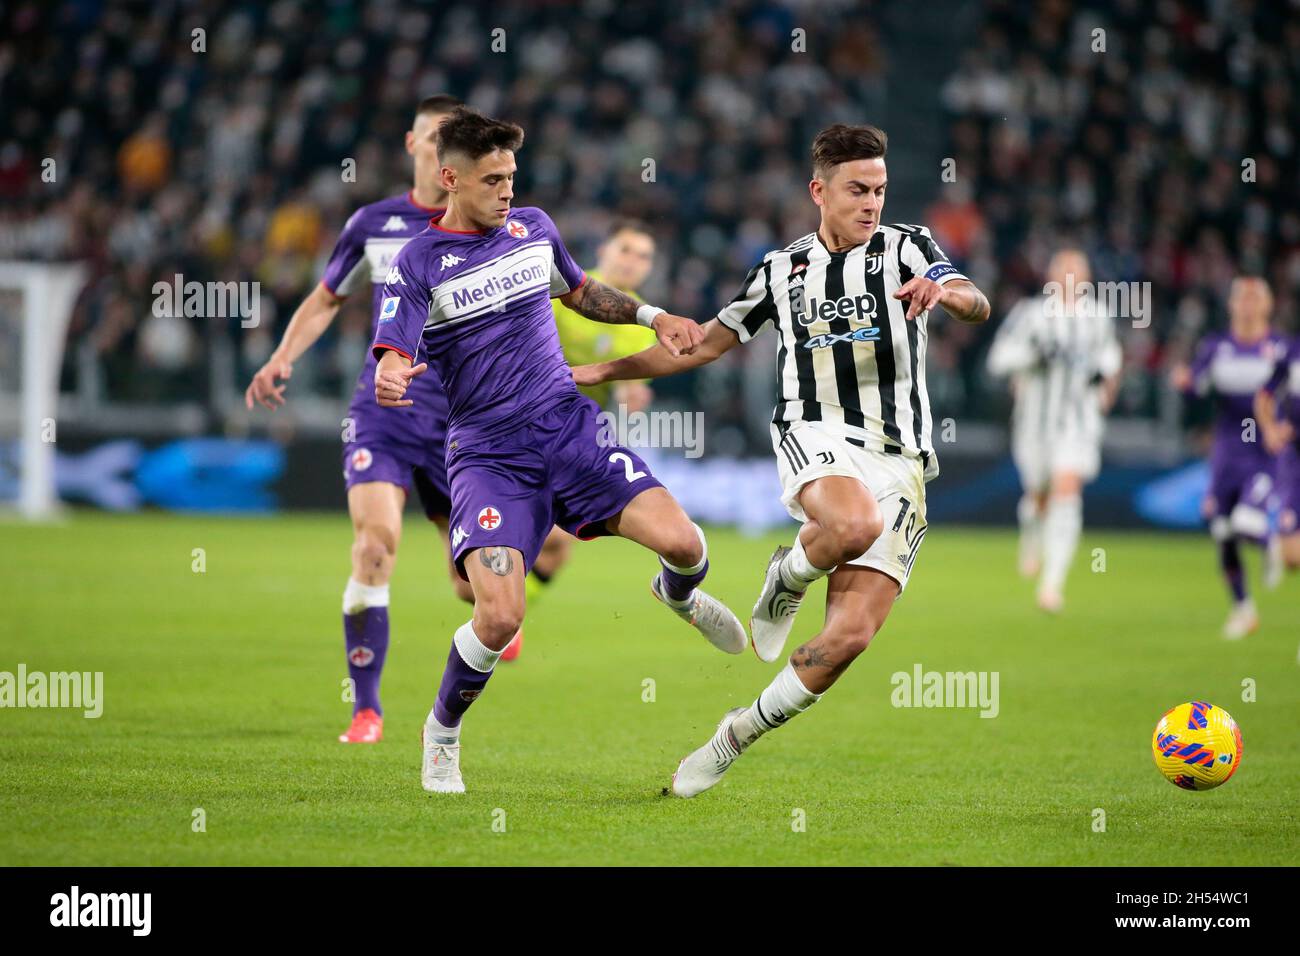 Turin, Italy. 07th Nov, 2021. Italian Serie A, Juventus Fc - Fiorentina Credit: Nderim Kaceli/Alamy Live News Stock Photo